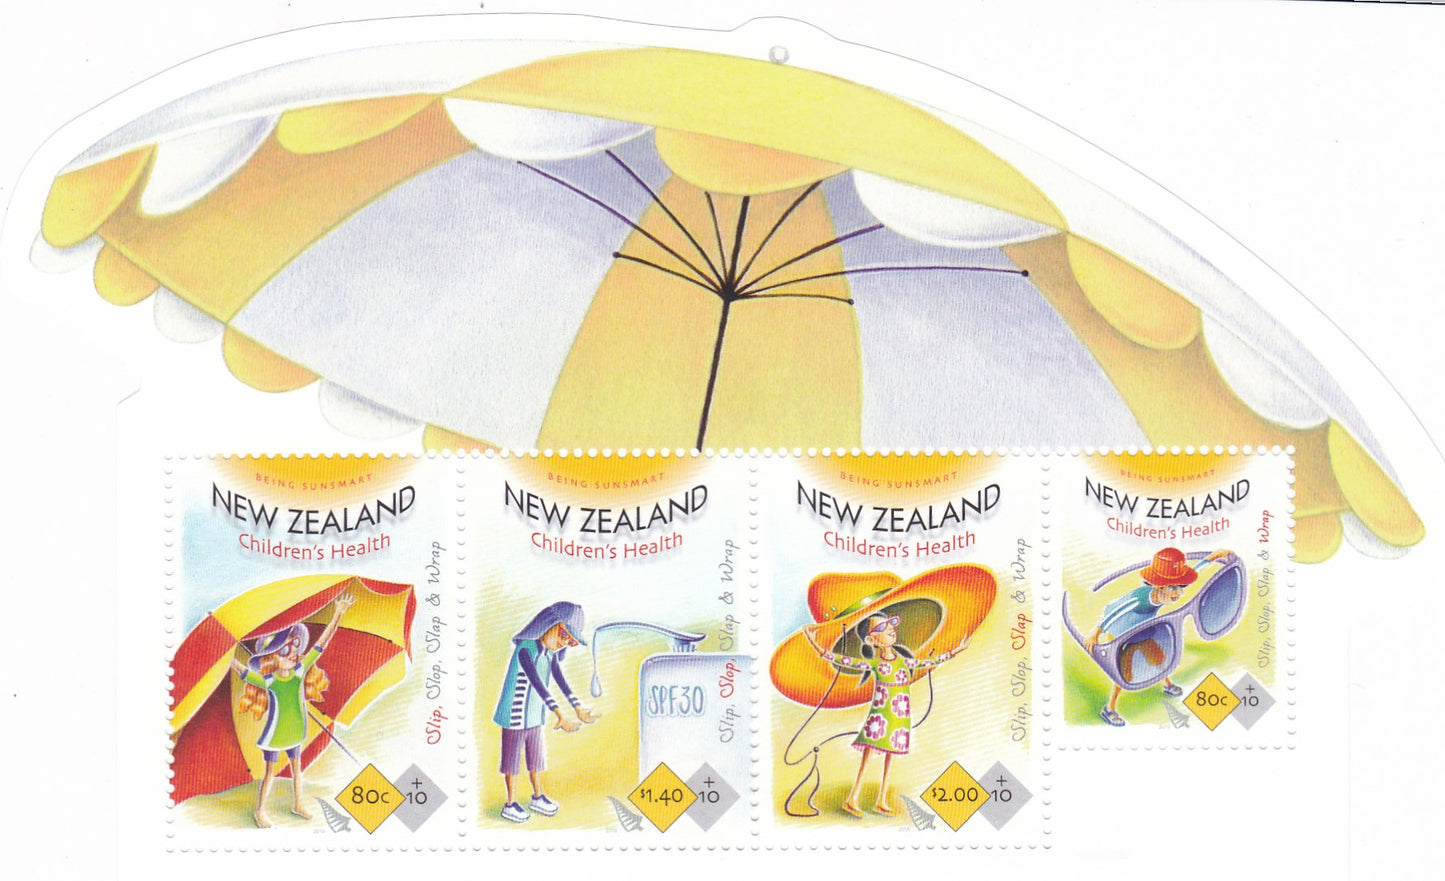 Newzealand children's health umbrella shaped stamps